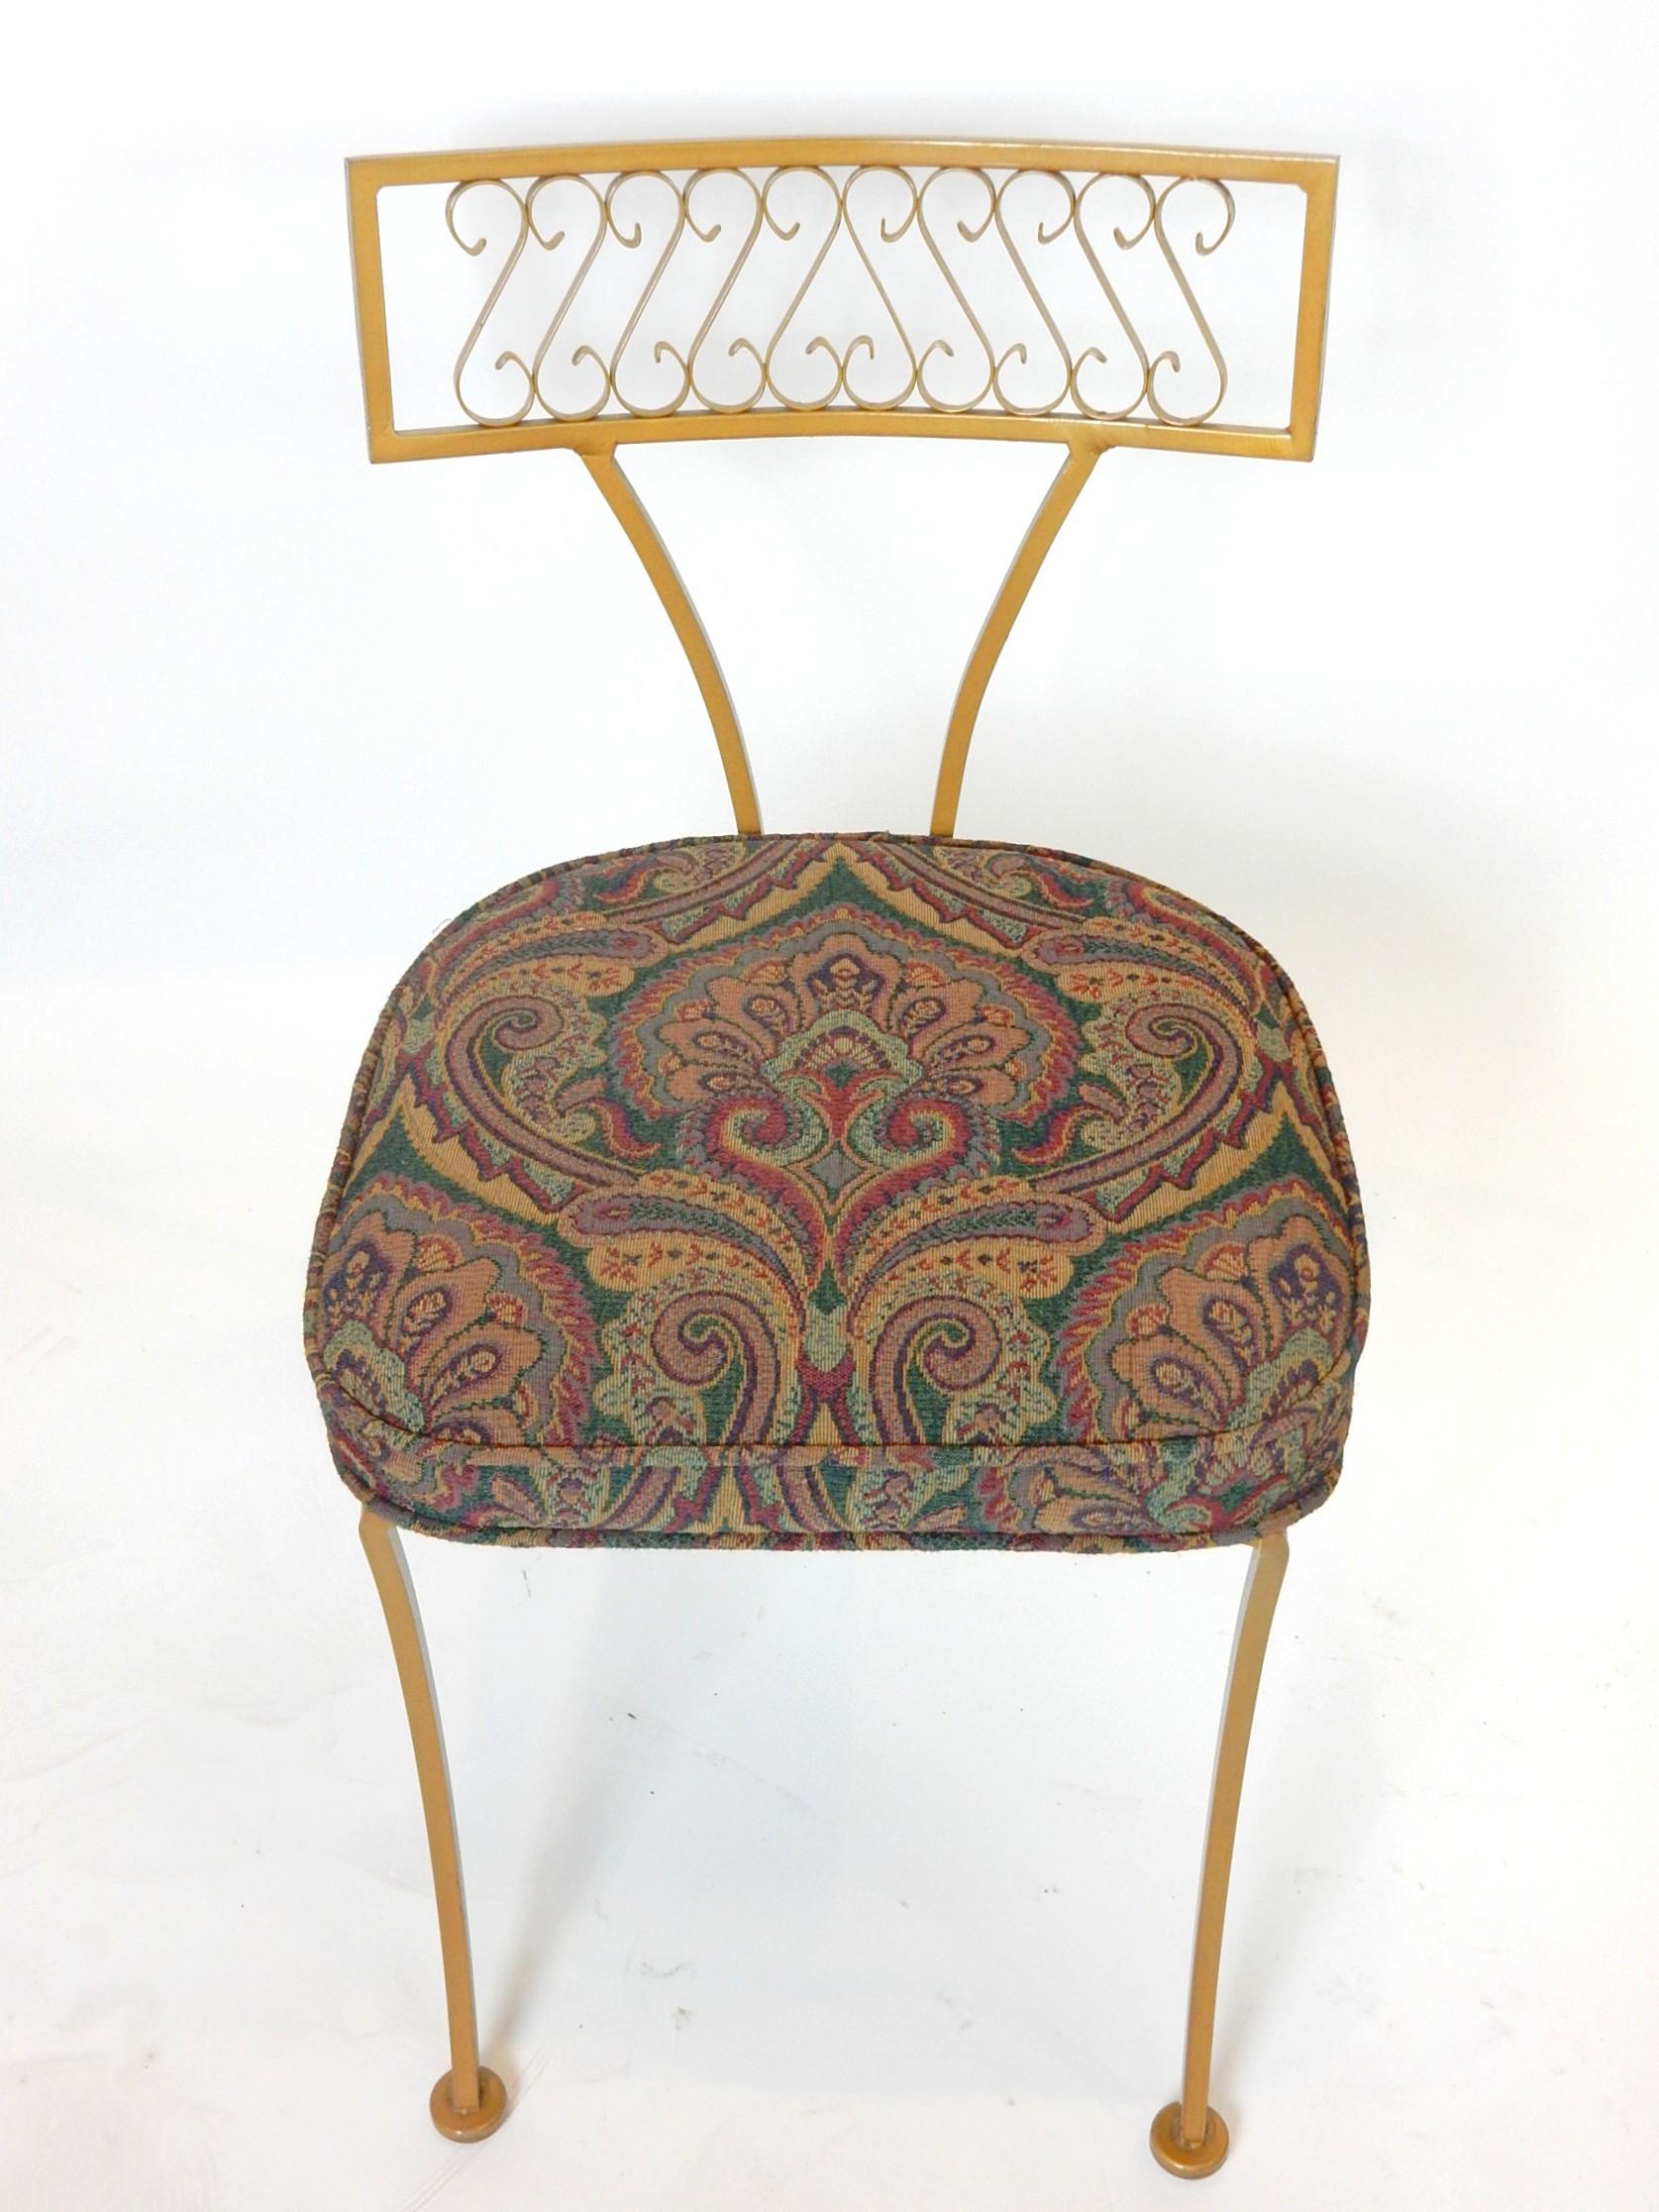 American Mid Century Metal Art Klismos Patio Chair Set For Sale